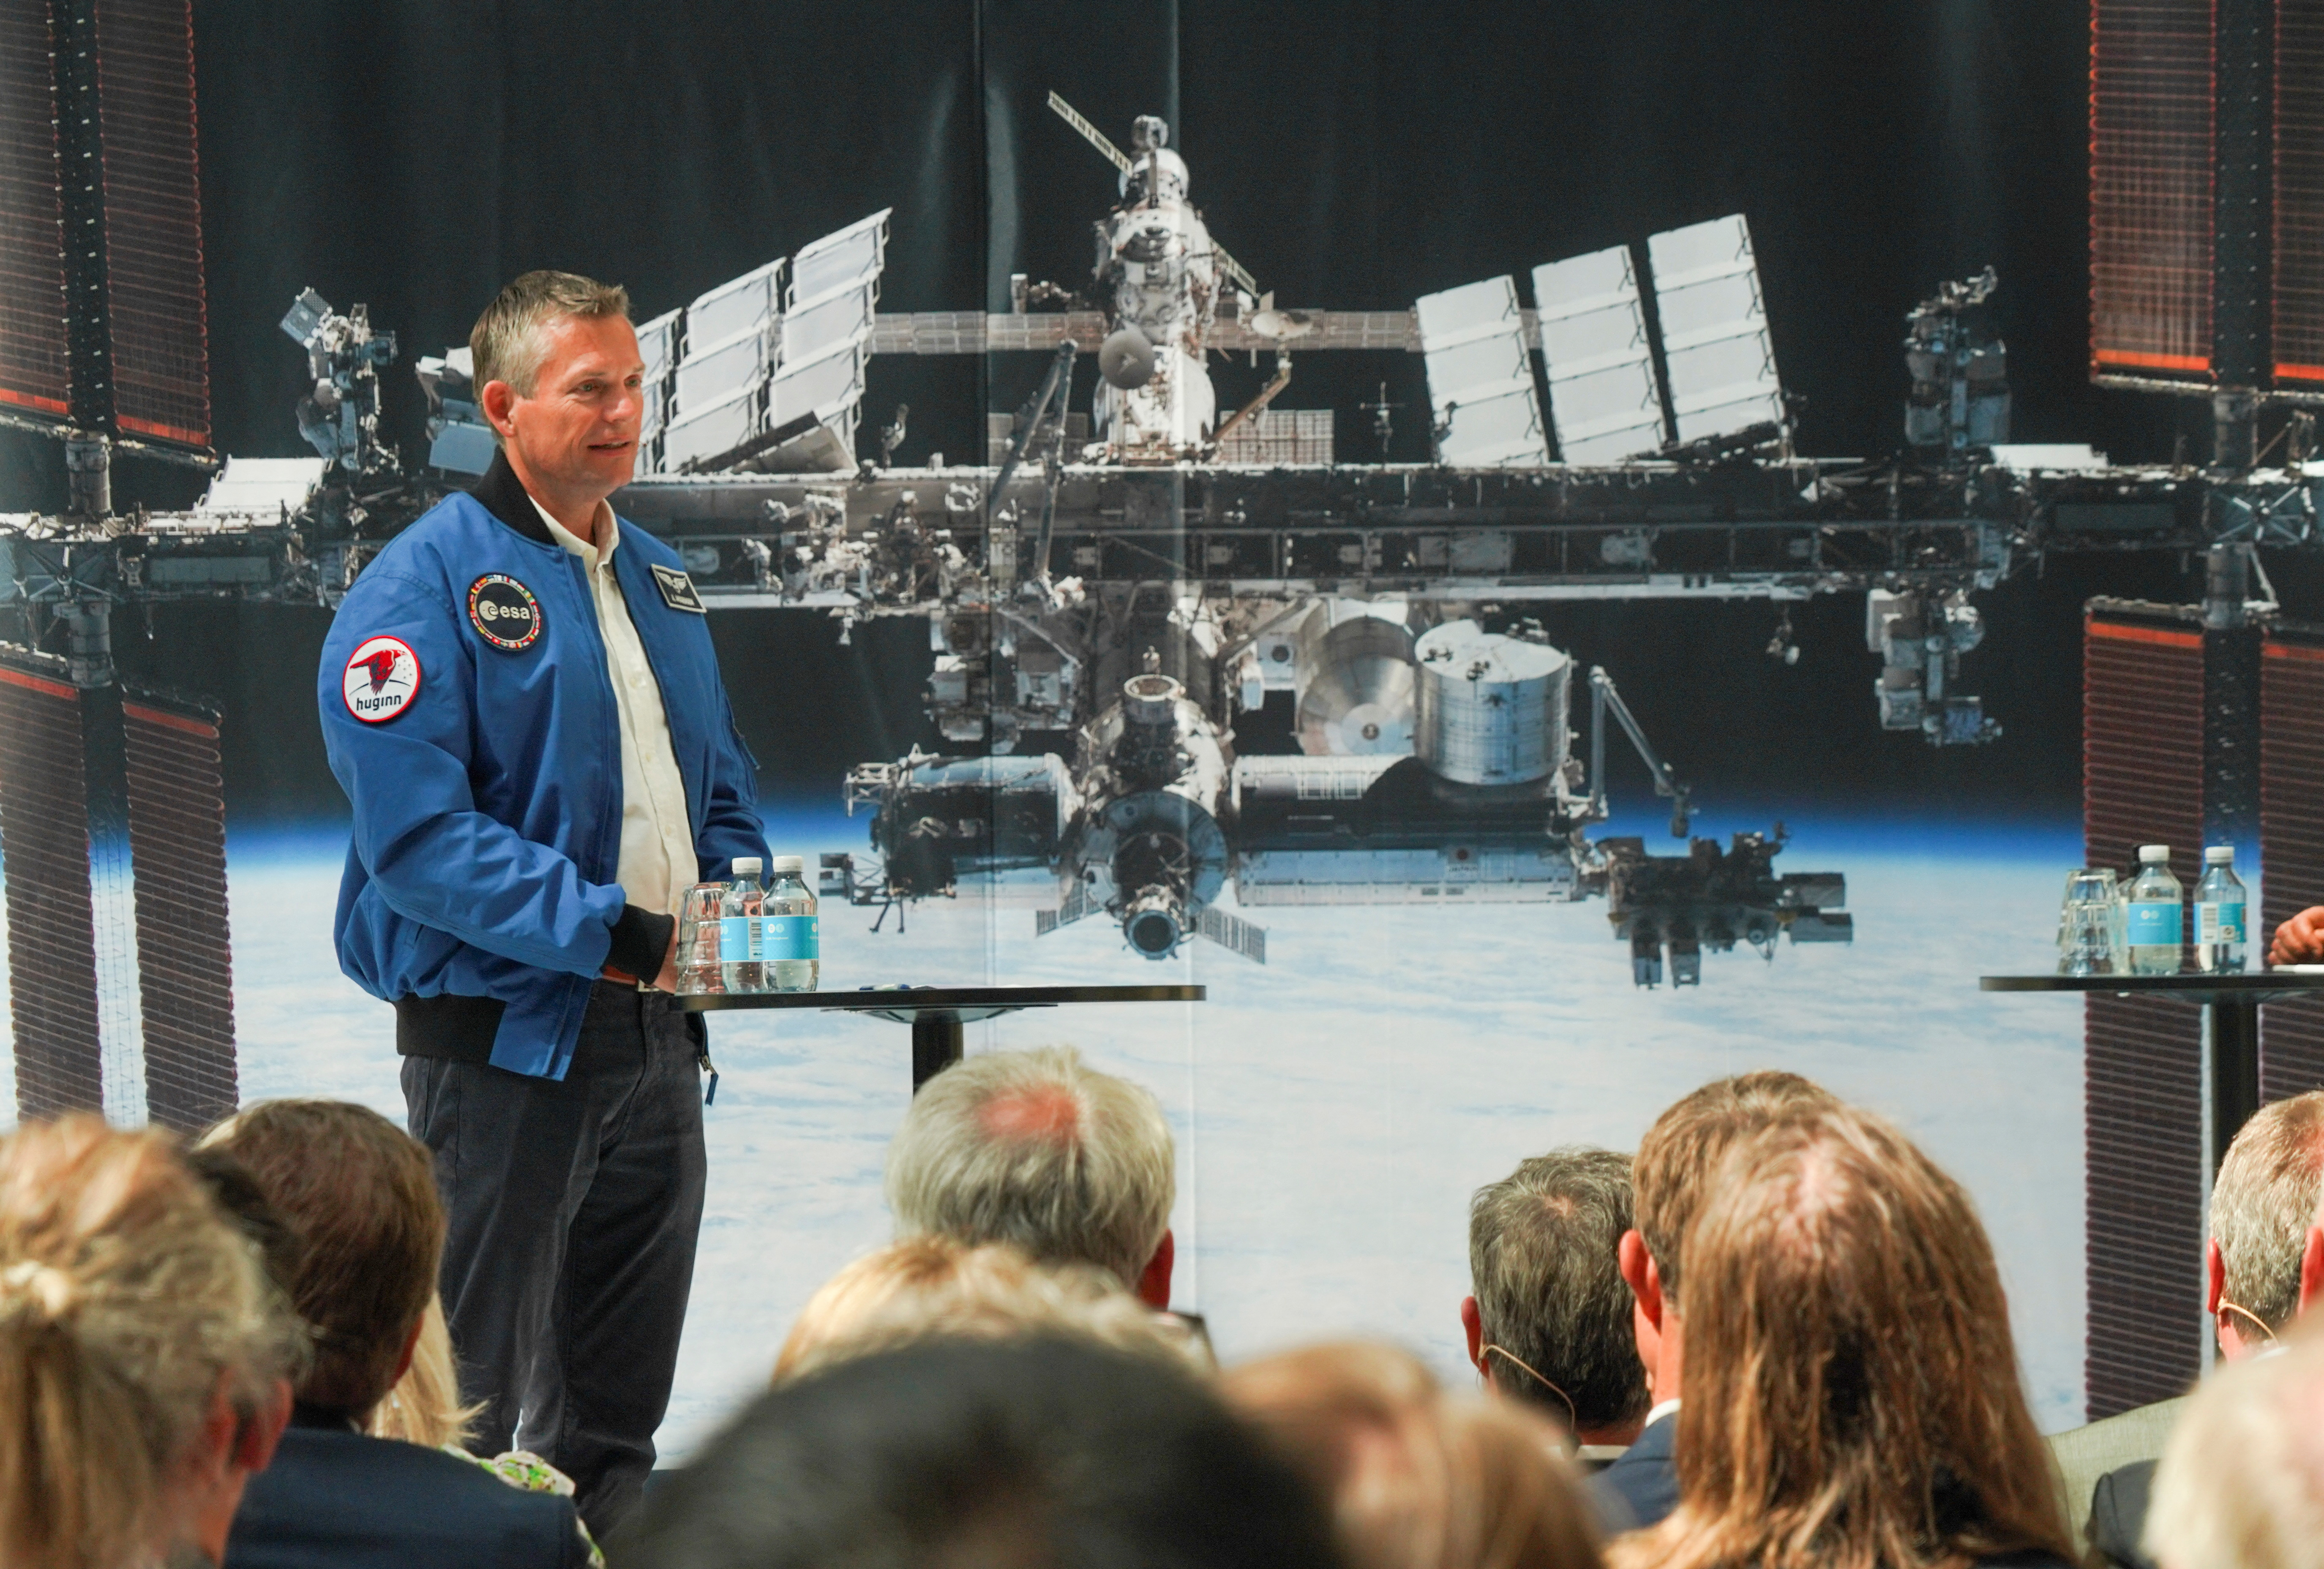 Danish astronaut Andreas Mogensen speaks at a kick-off event for the Huginn space mission in Copenhagen